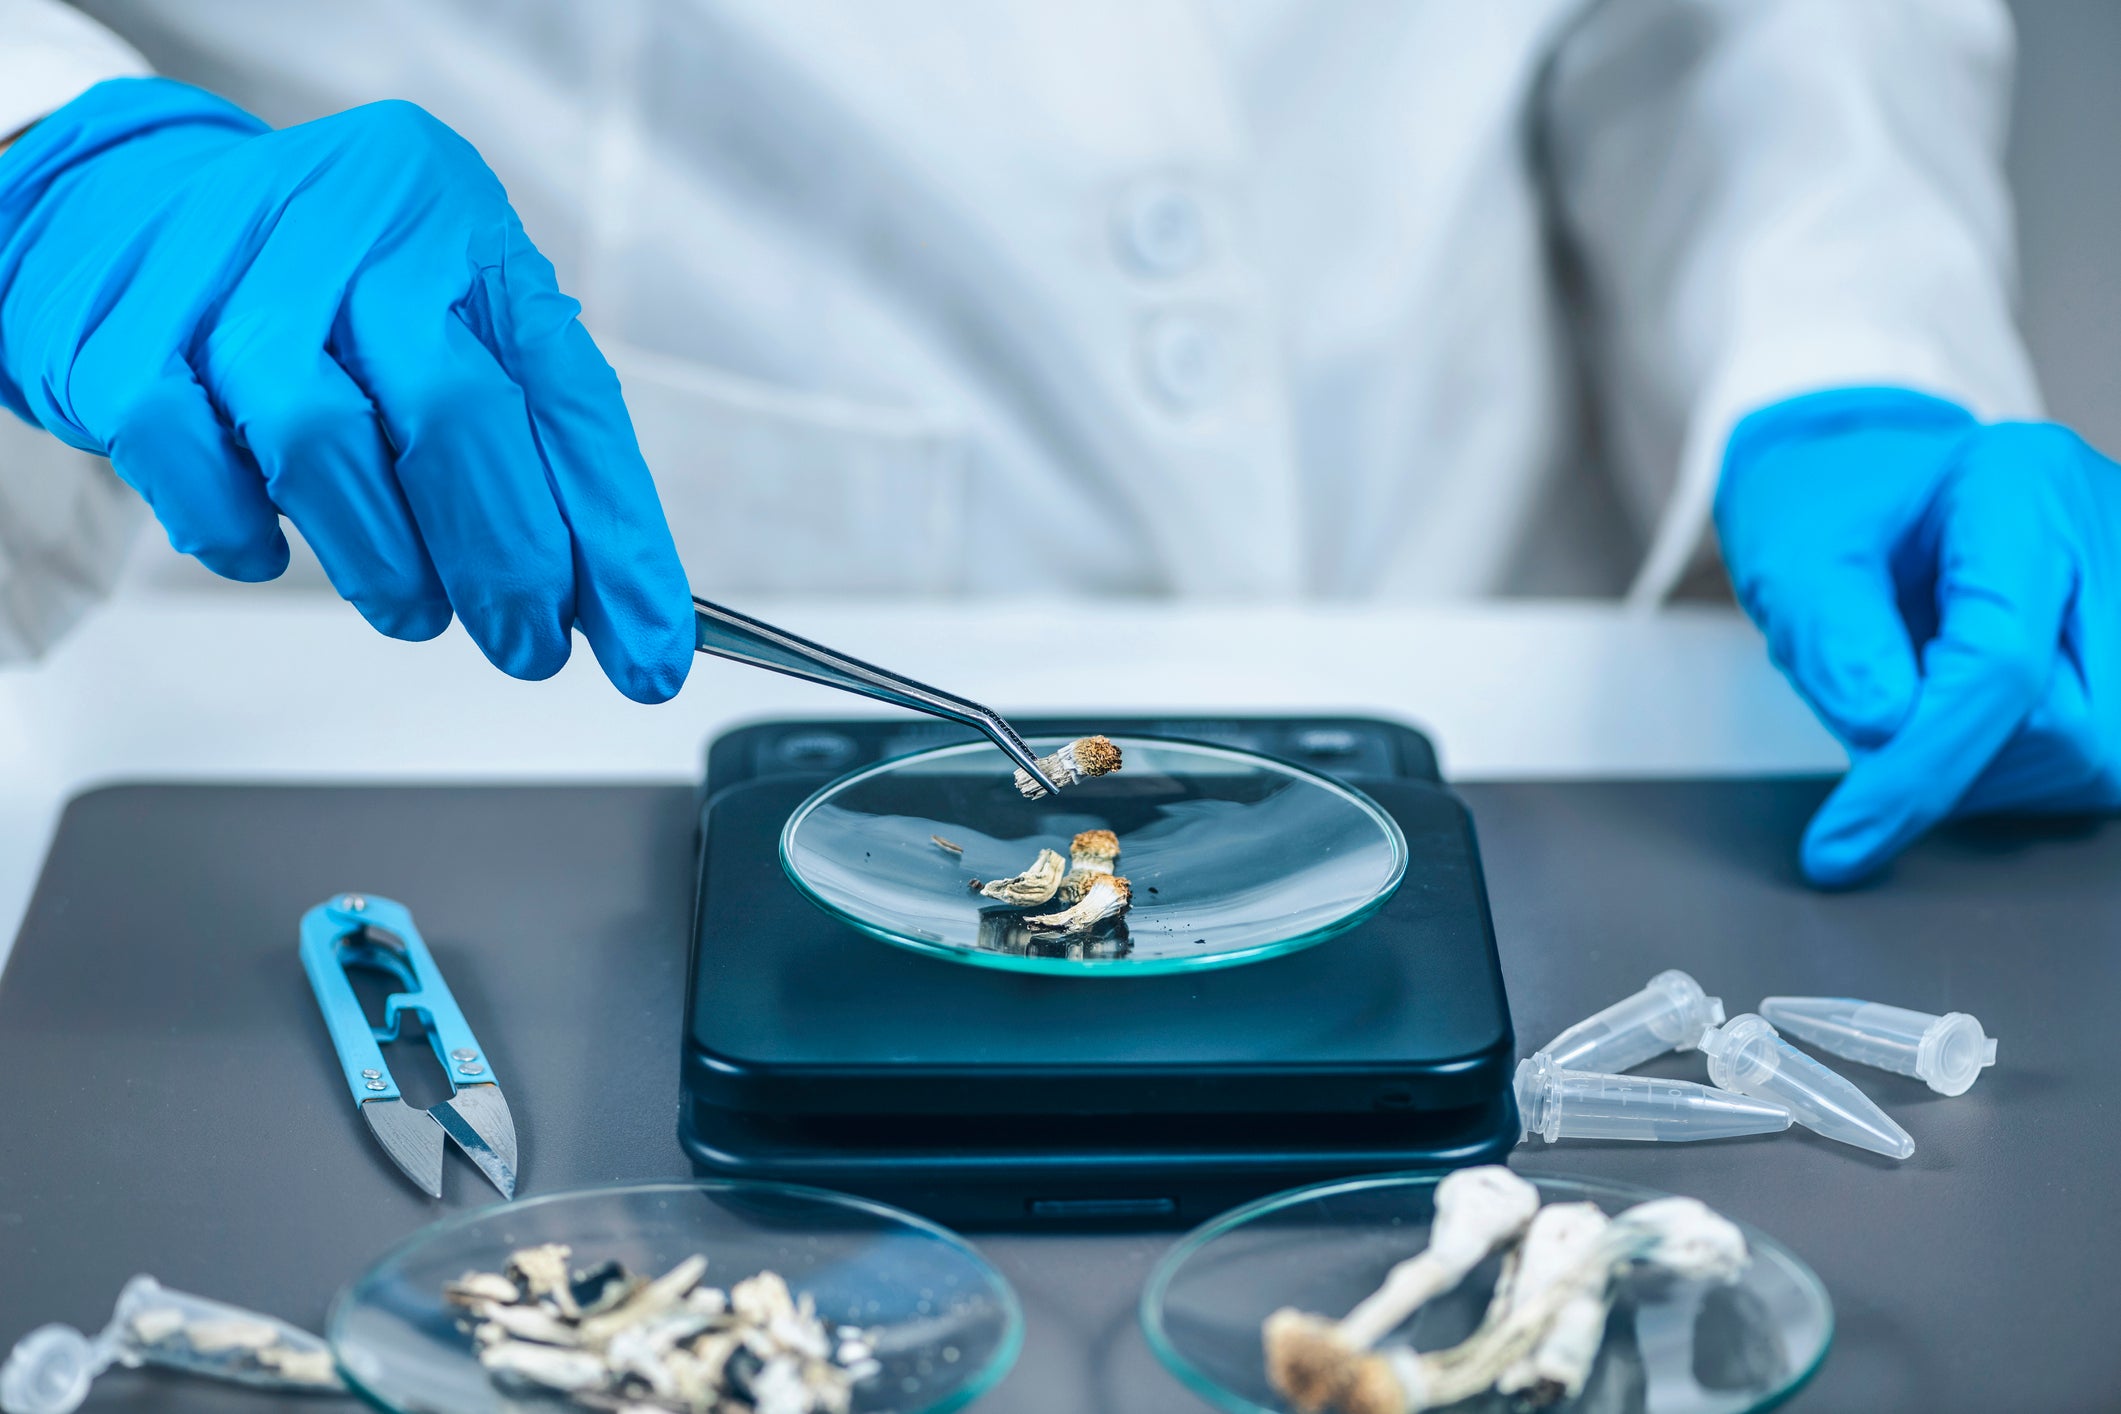 A scientist measures micro doses of a magic mushrooms